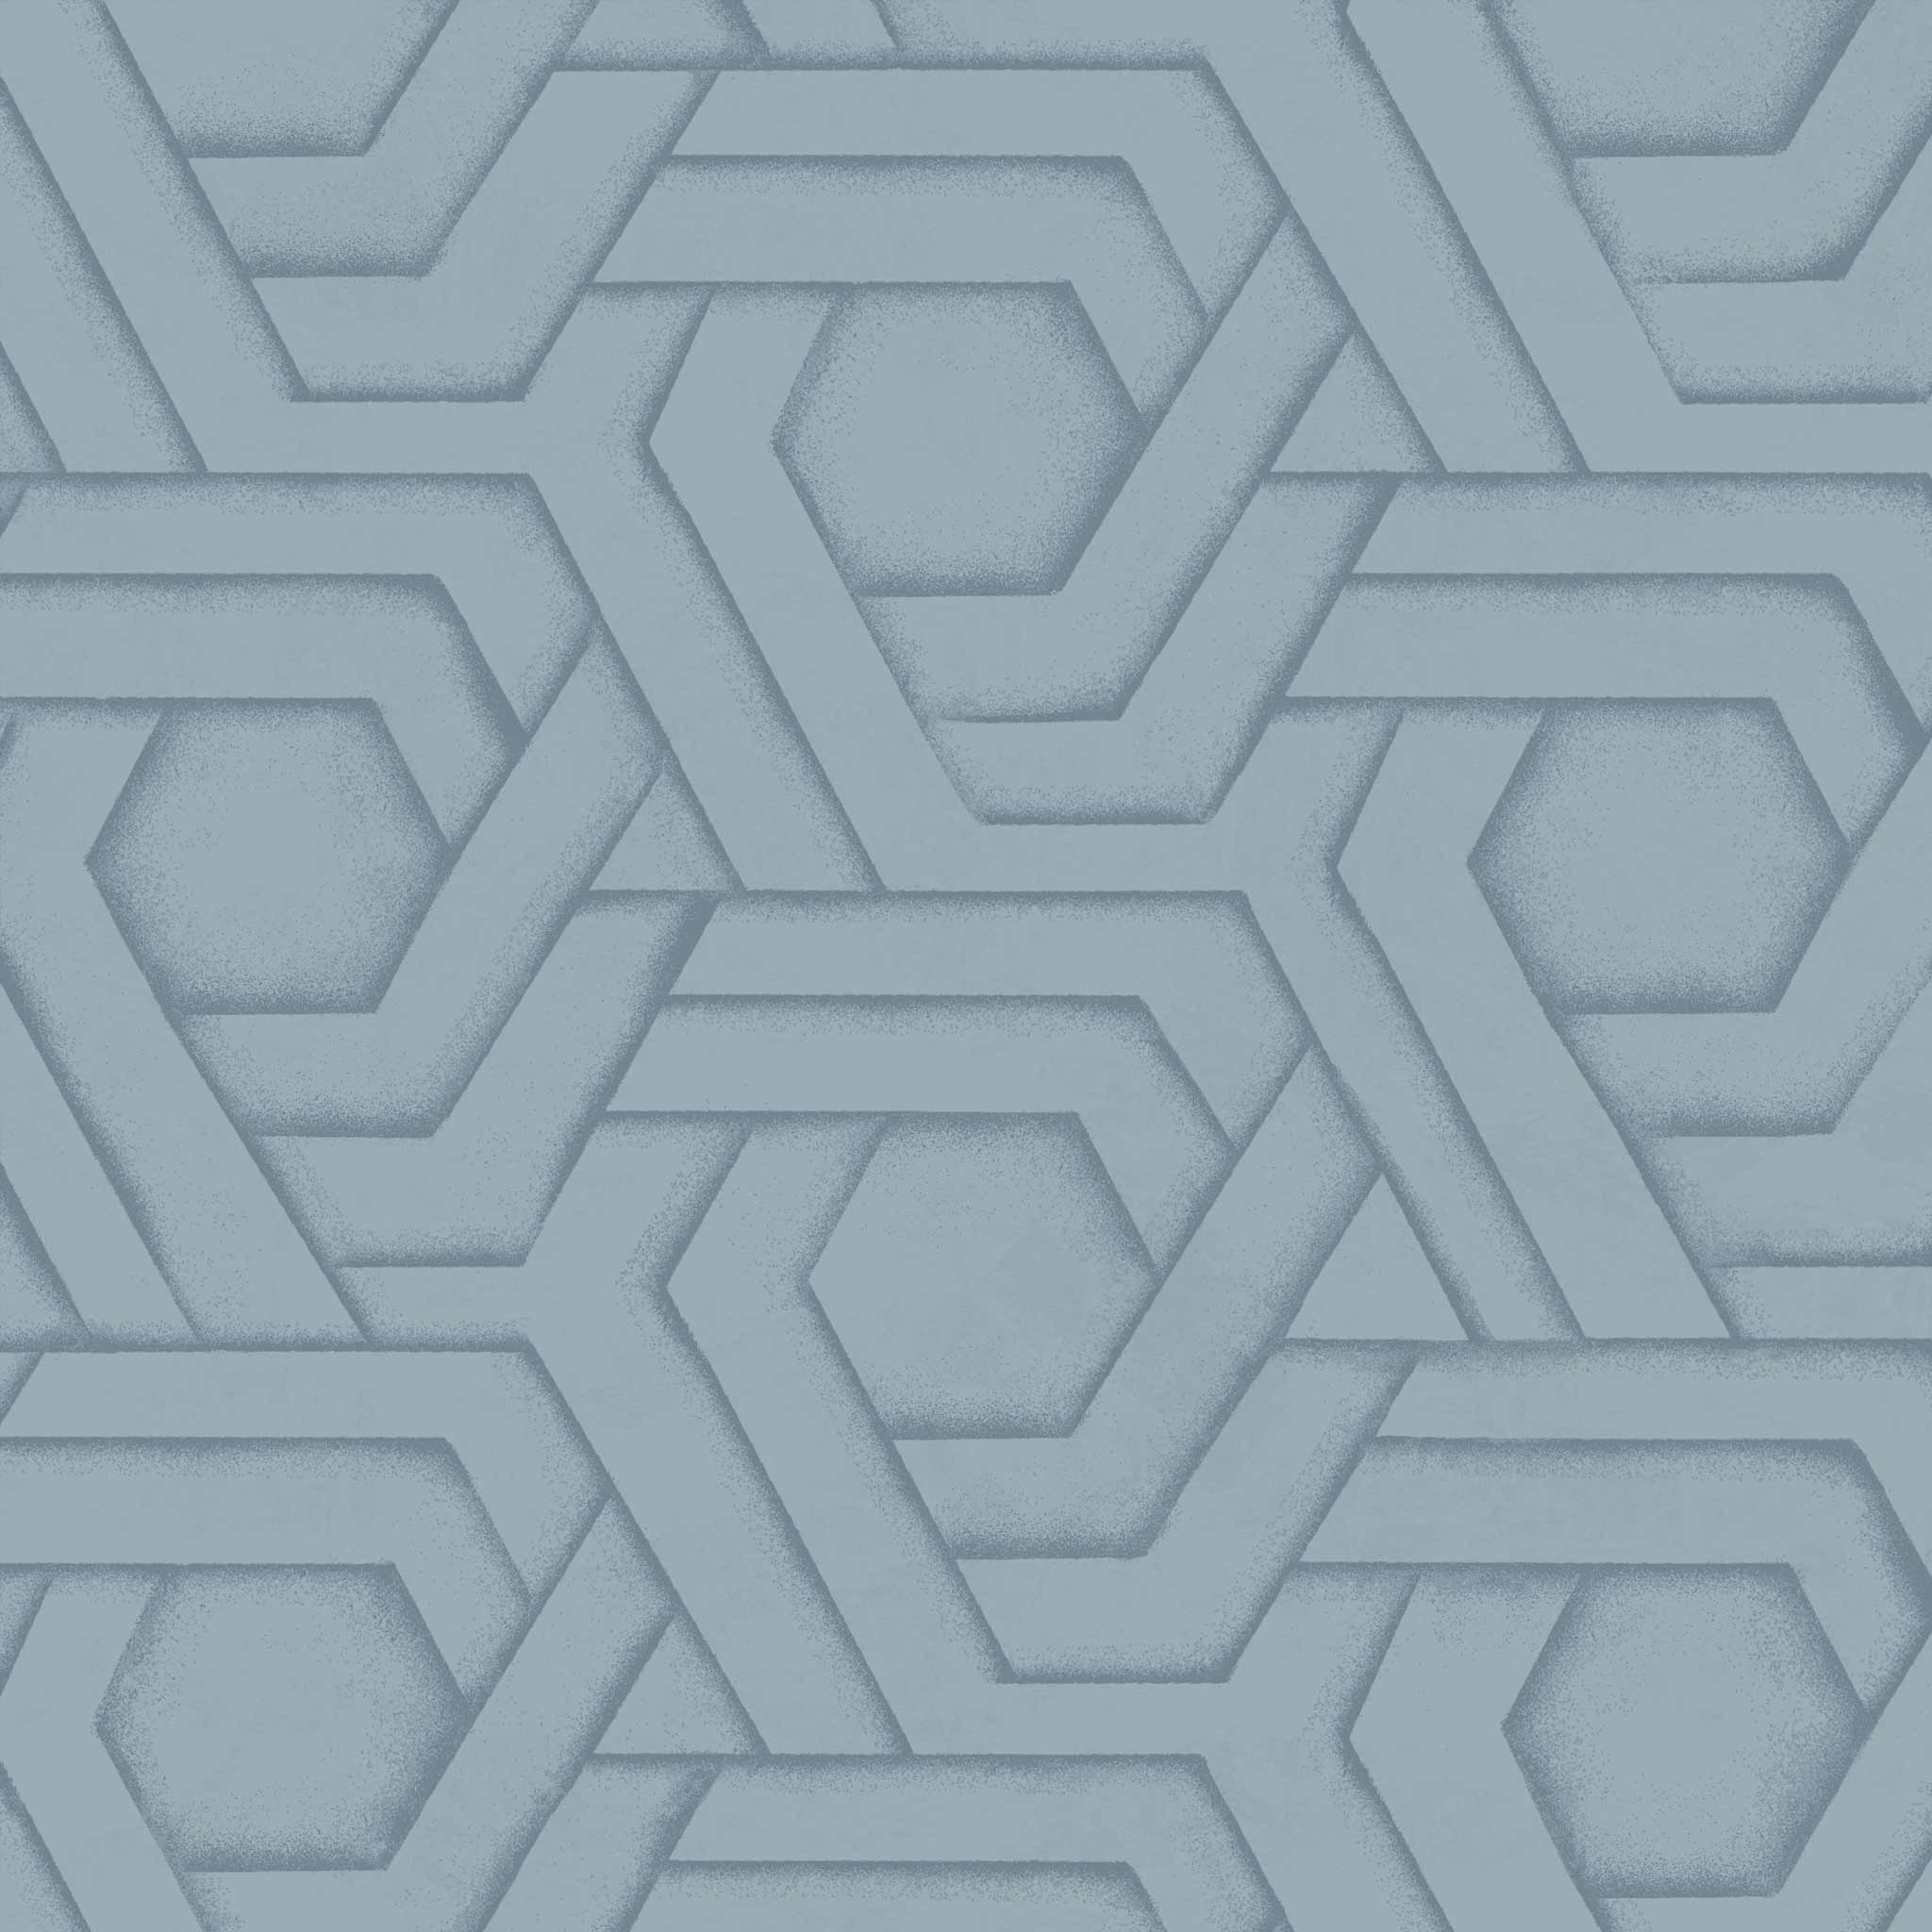 Habita wallpaper design - blue Hix pattern in Celestial